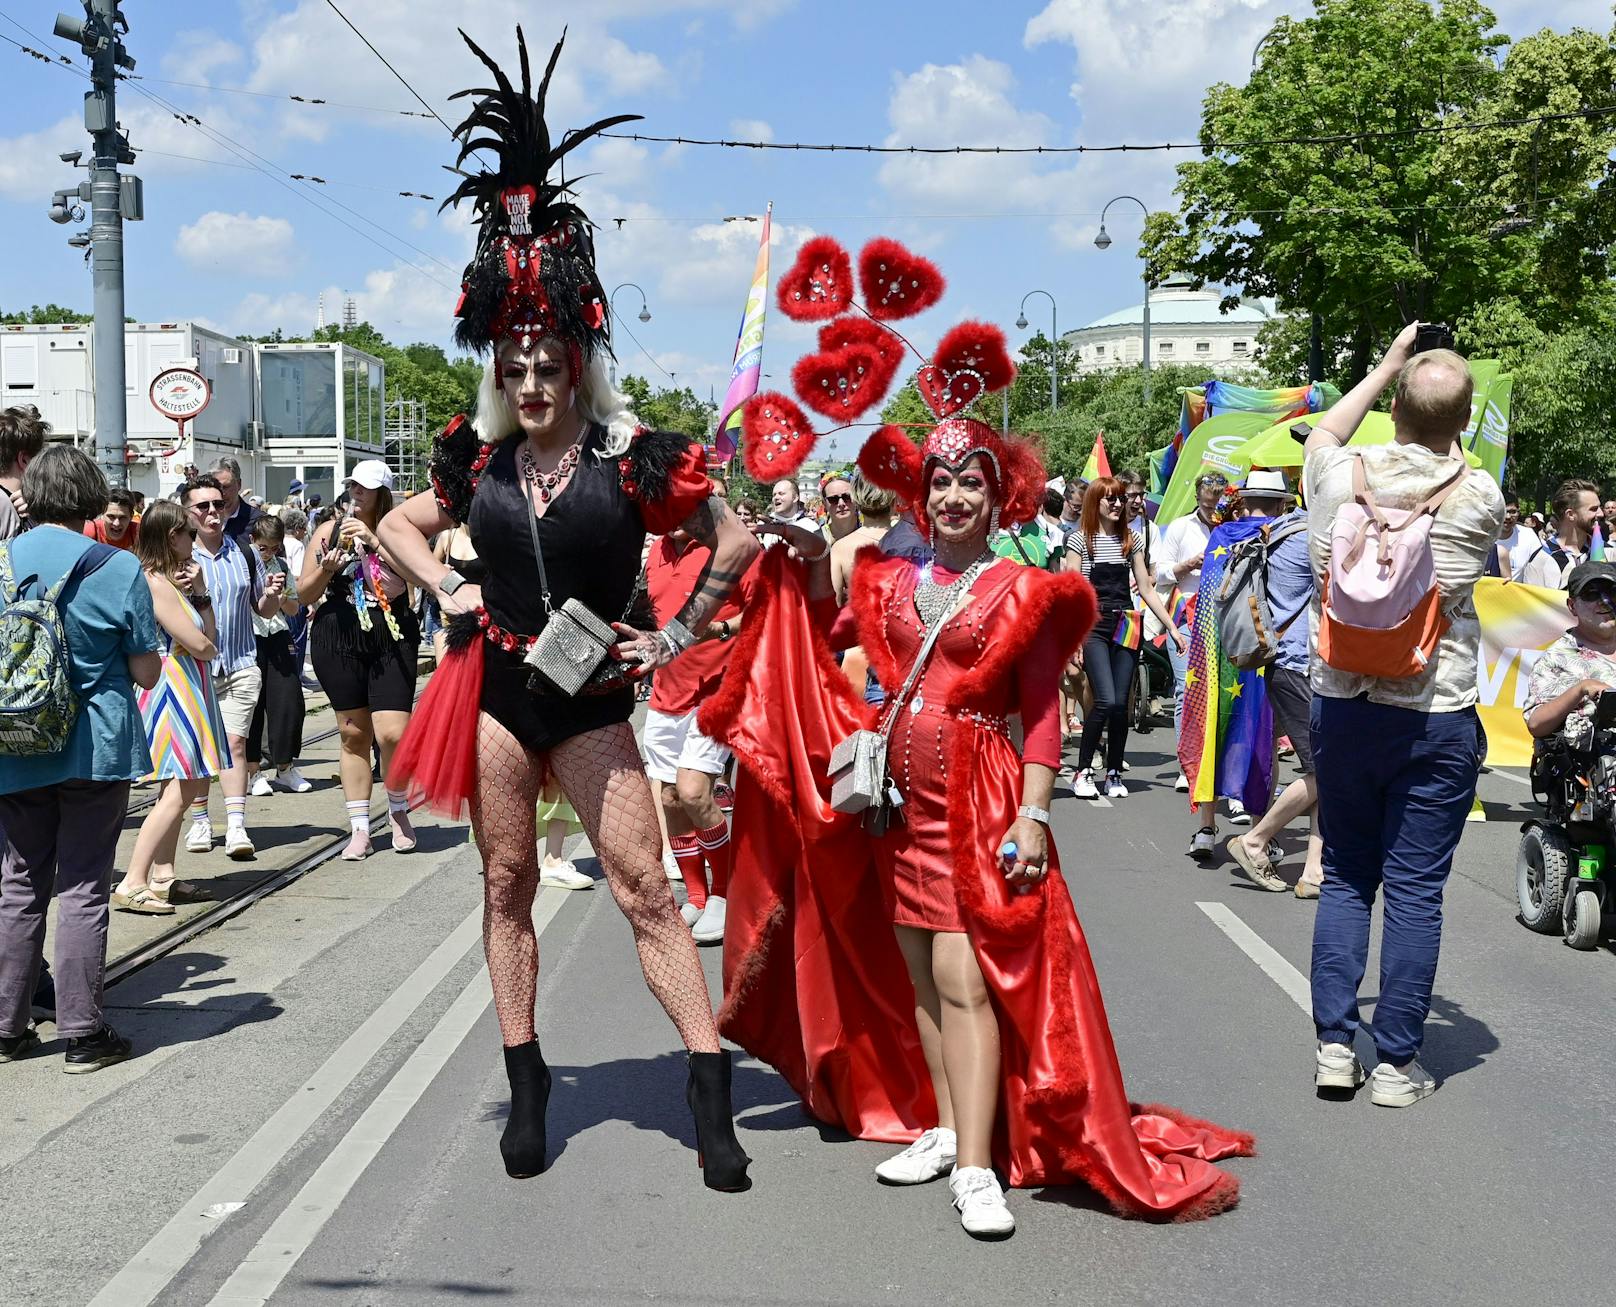 Riesige Party – 250.000 feiern Regenbogenparade am Ring